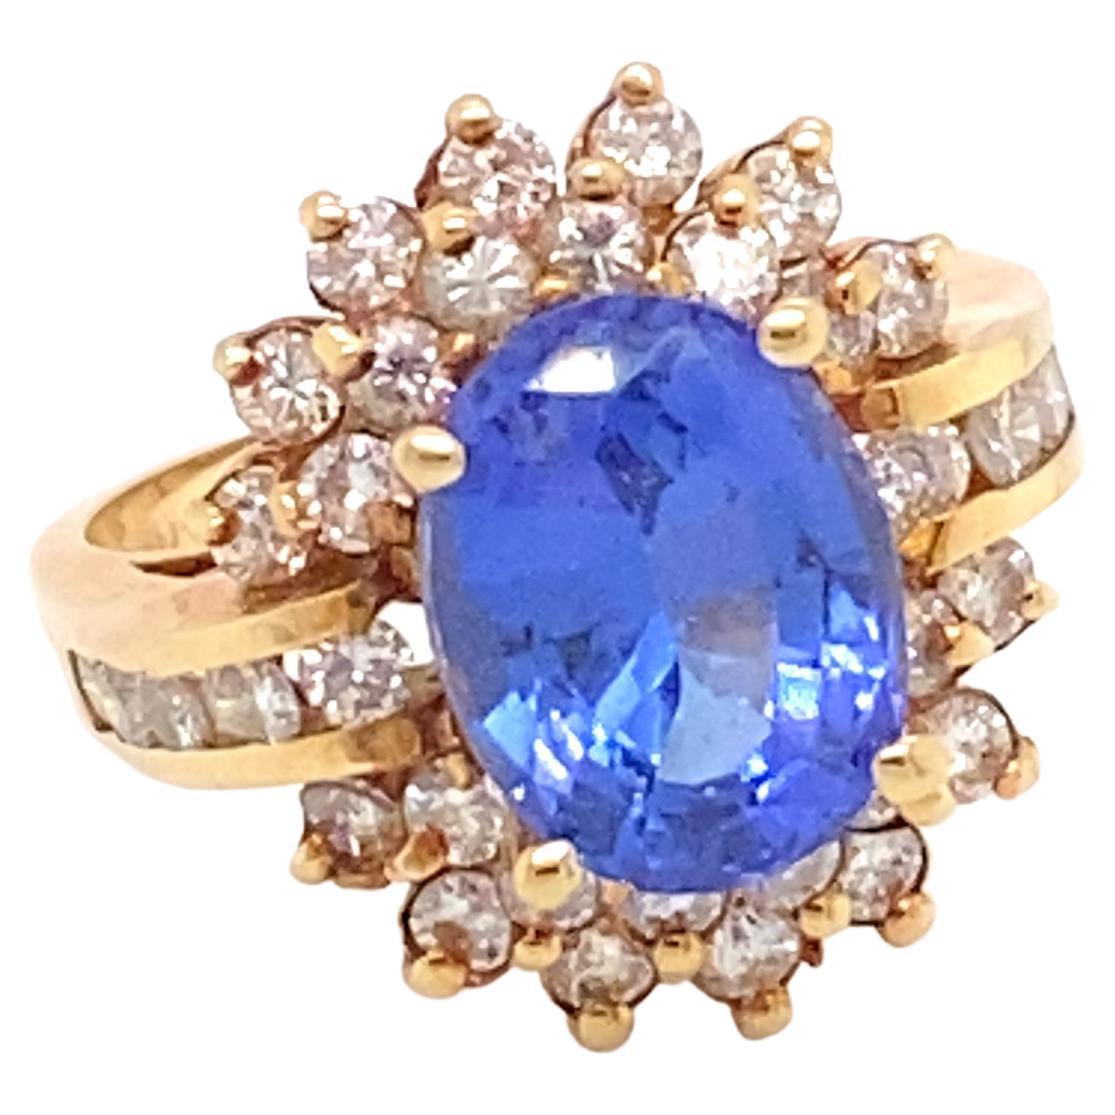 2.0 Carat Oval Sapphire and 0.50 Carat Diamond Ring in 14 Karat Gold